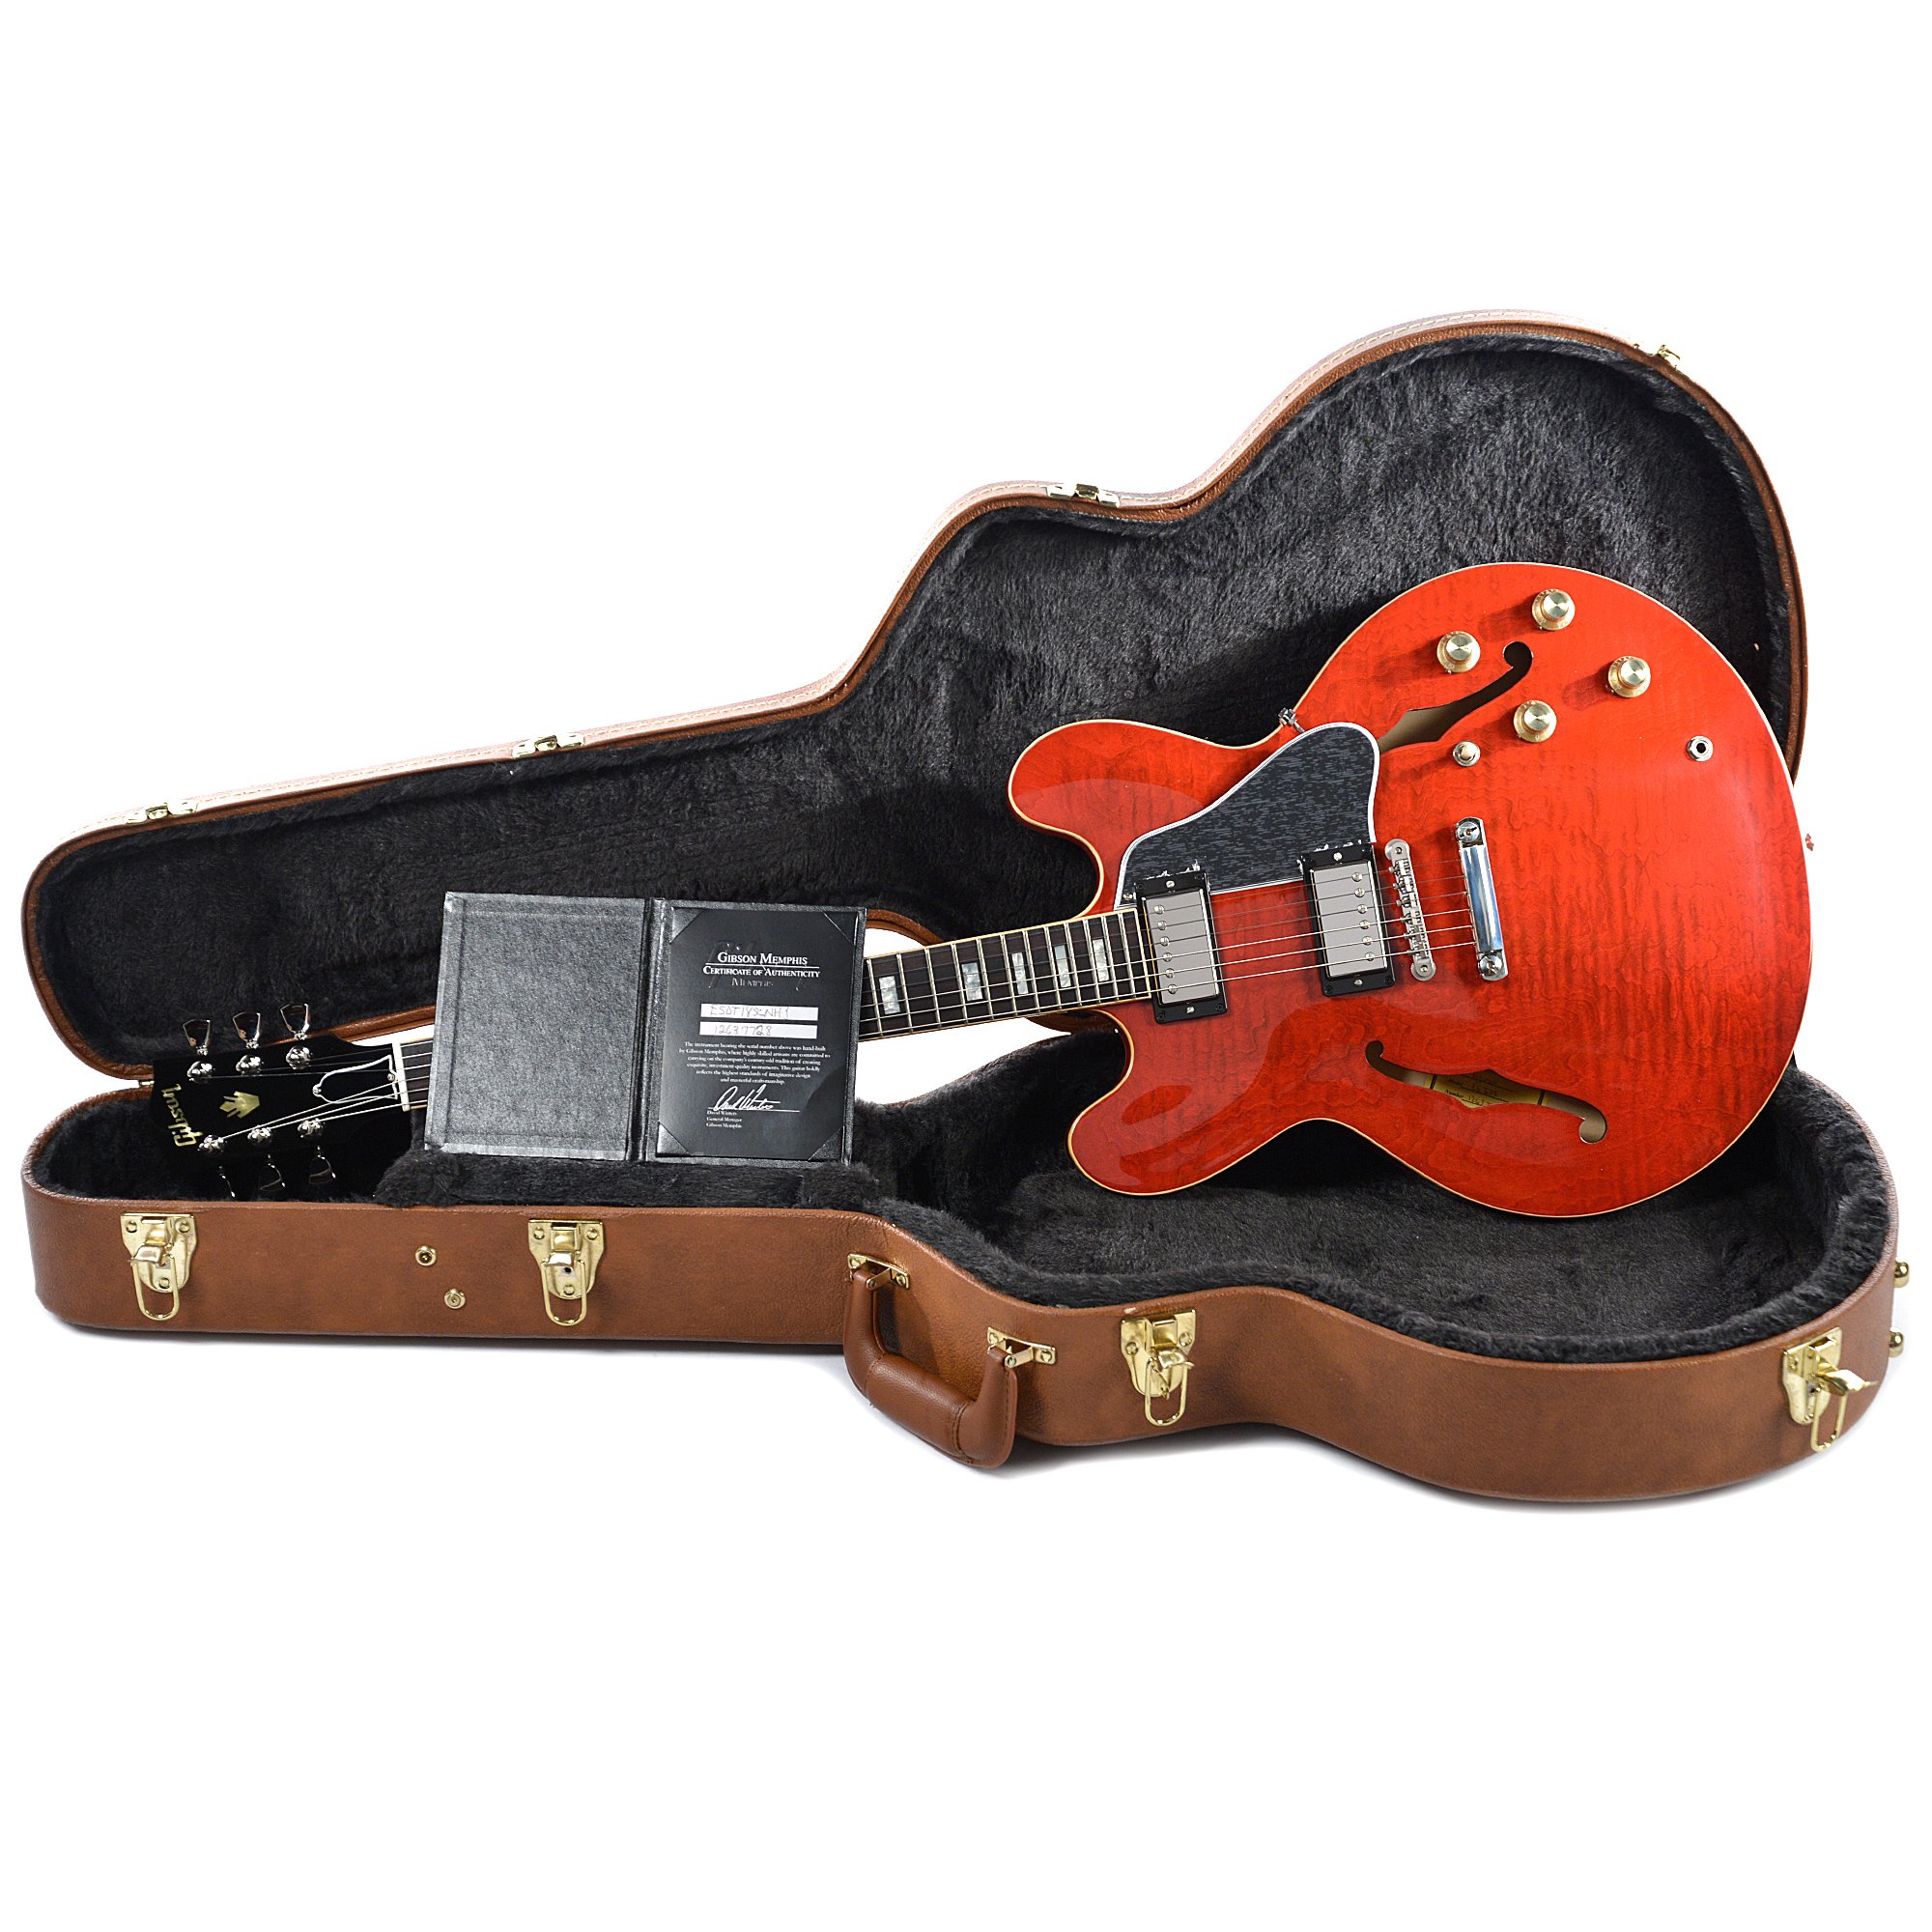 Gibson Es-335 Figured 2018 Ltd - Antique Sixties Cherry - Semi hollow elektriche gitaar - Variation 5